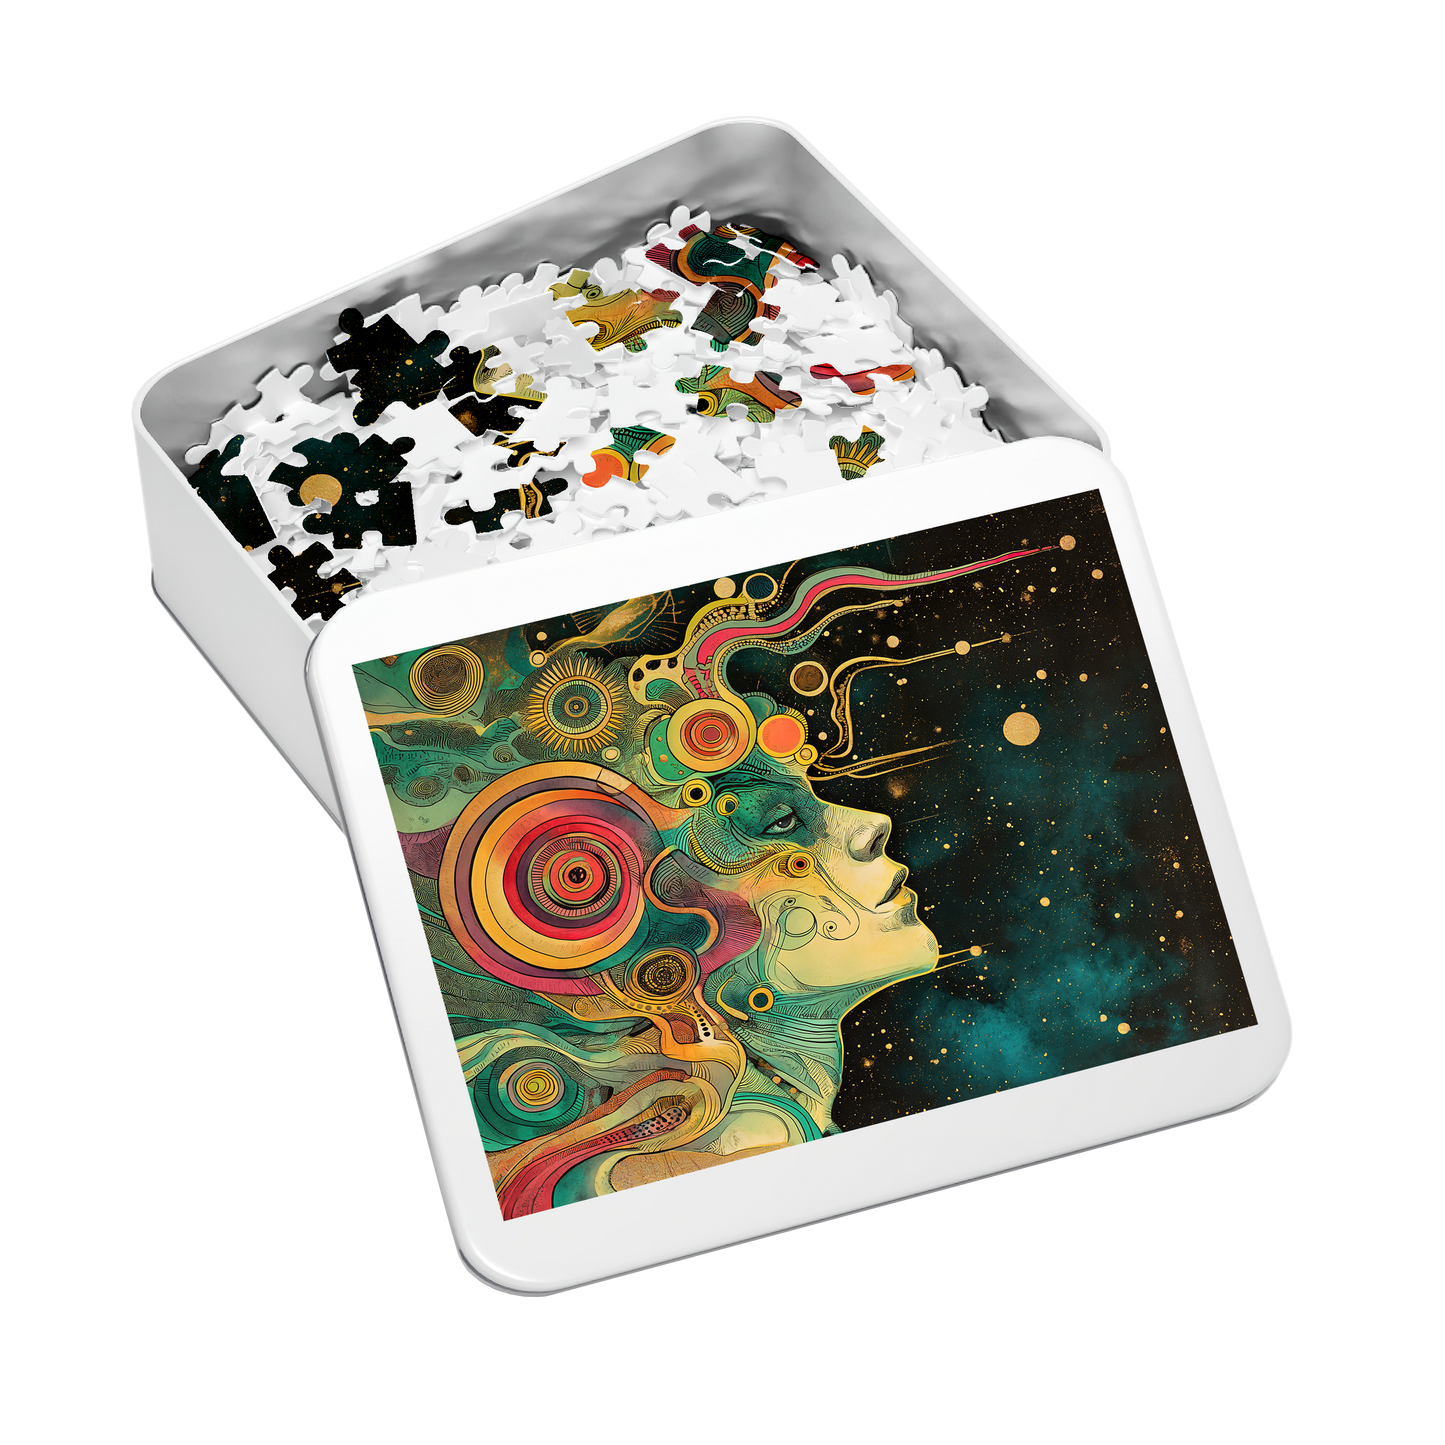 Unknown Origins - Premium Jigsaw Puzzle, Vibrant, Sci-fi Multiple Sizes Available